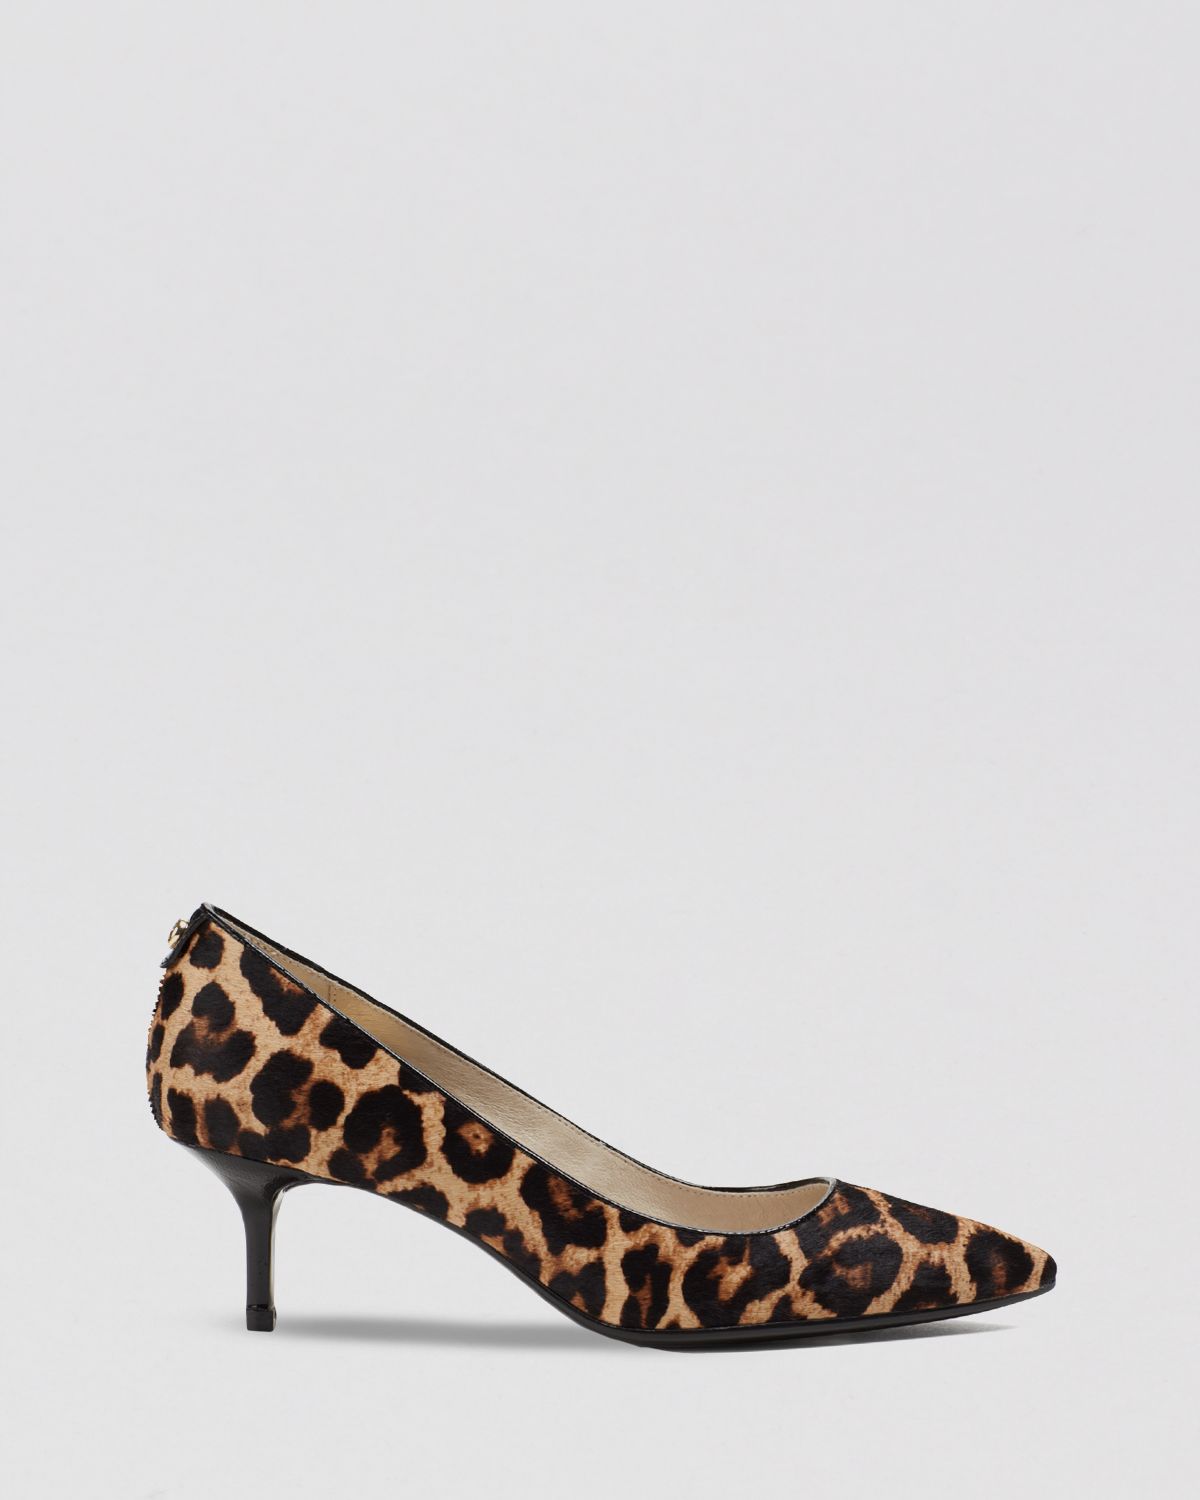 MICHAEL KORS Leopard Print Shoes Flats Loafers Womens 95 M 9 ½ Calf Hair  Slip  eBay